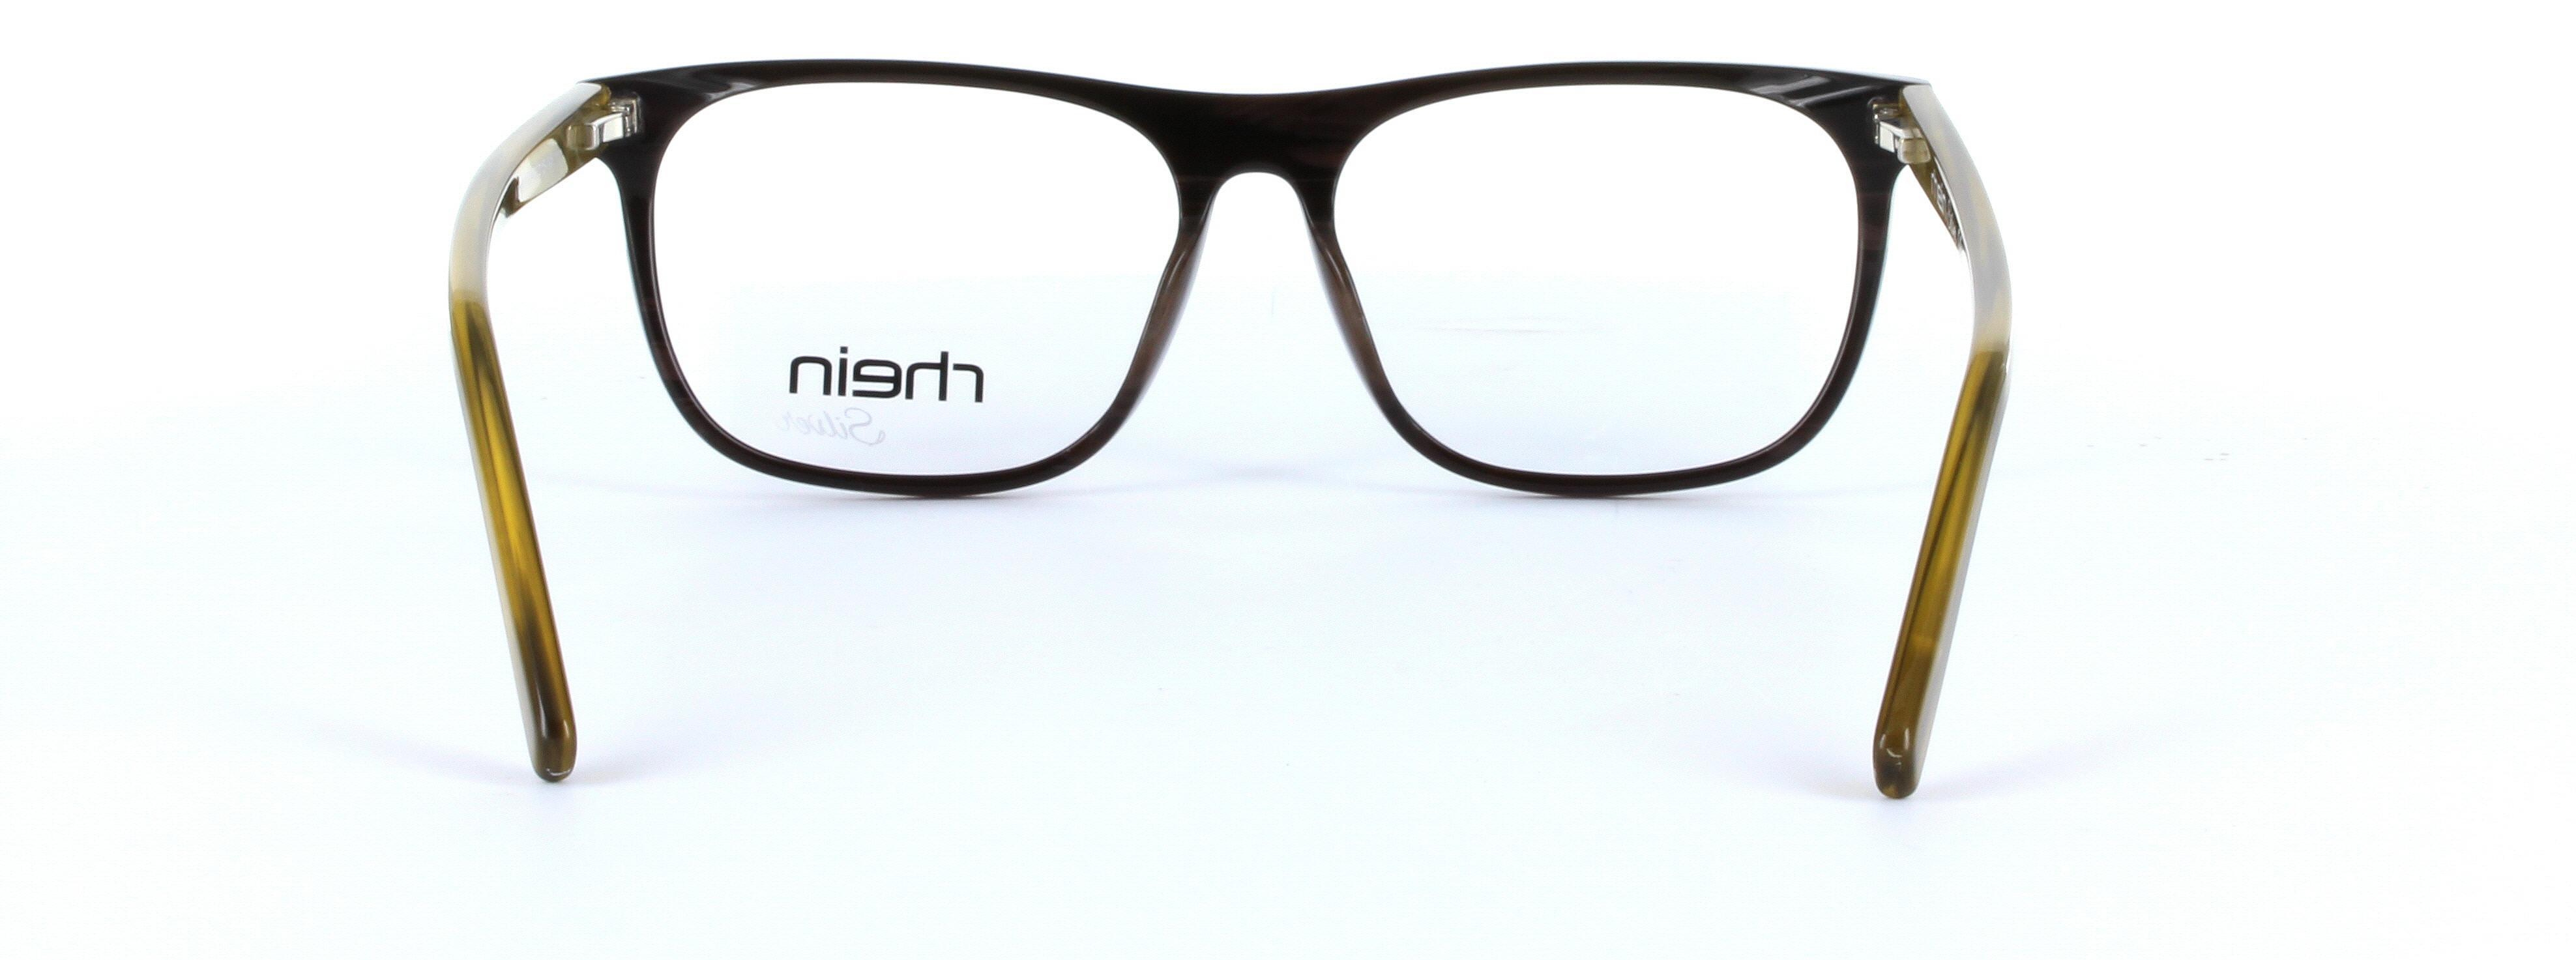 Cian Black and Green Full Rim Rectangular Plastic Glasses - Image View 3